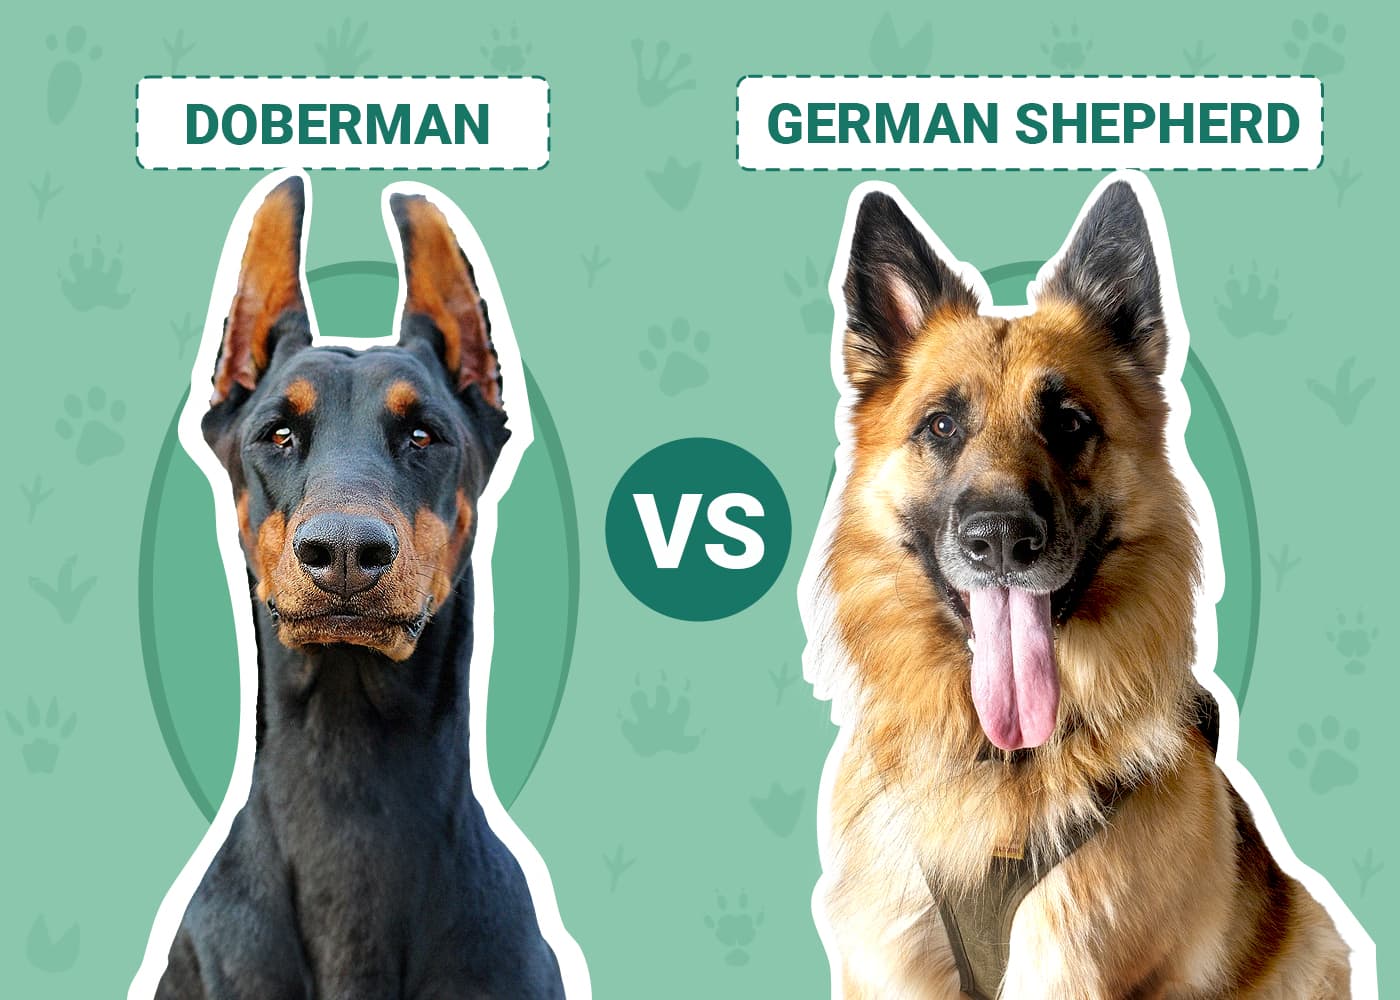 Doberman vs German Shepherd